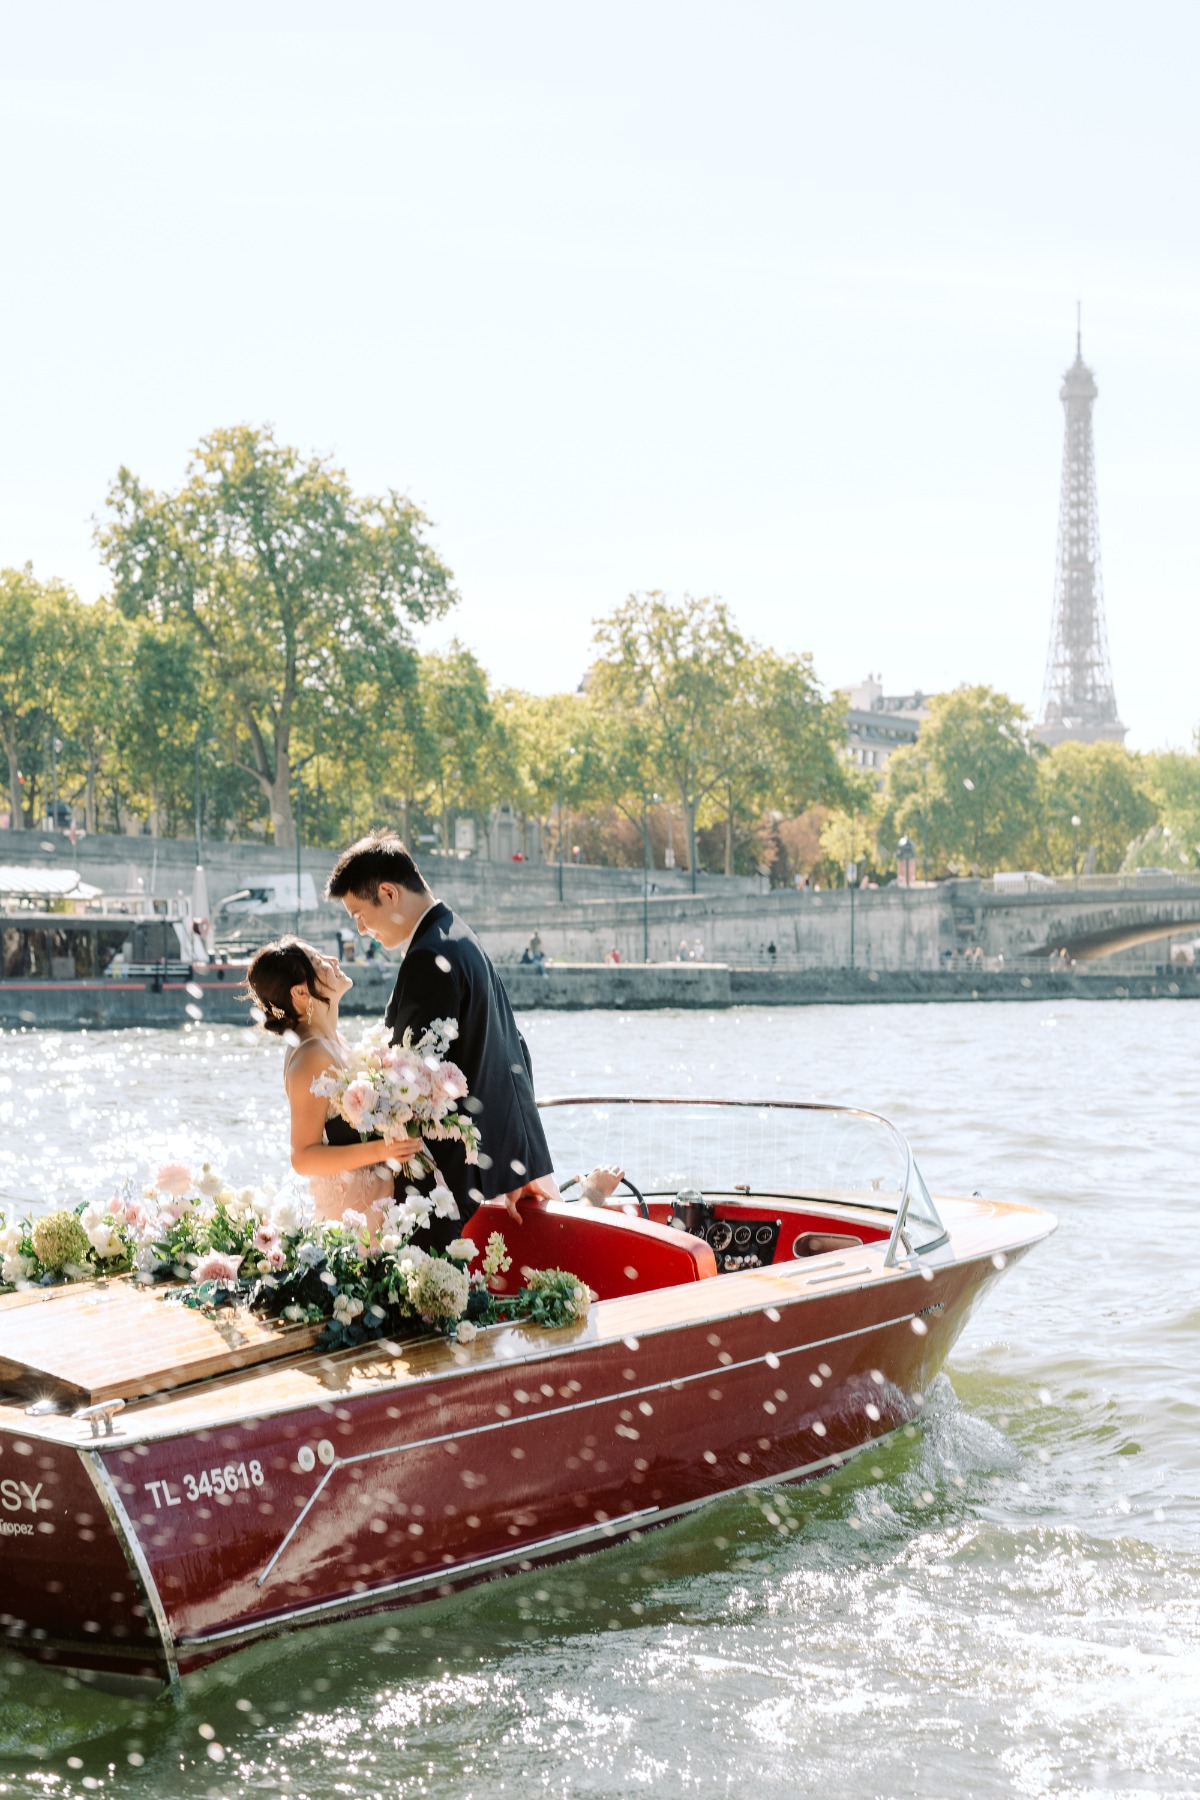 elizaveta-photography-romance-wedding-paris-boat-cruise-60